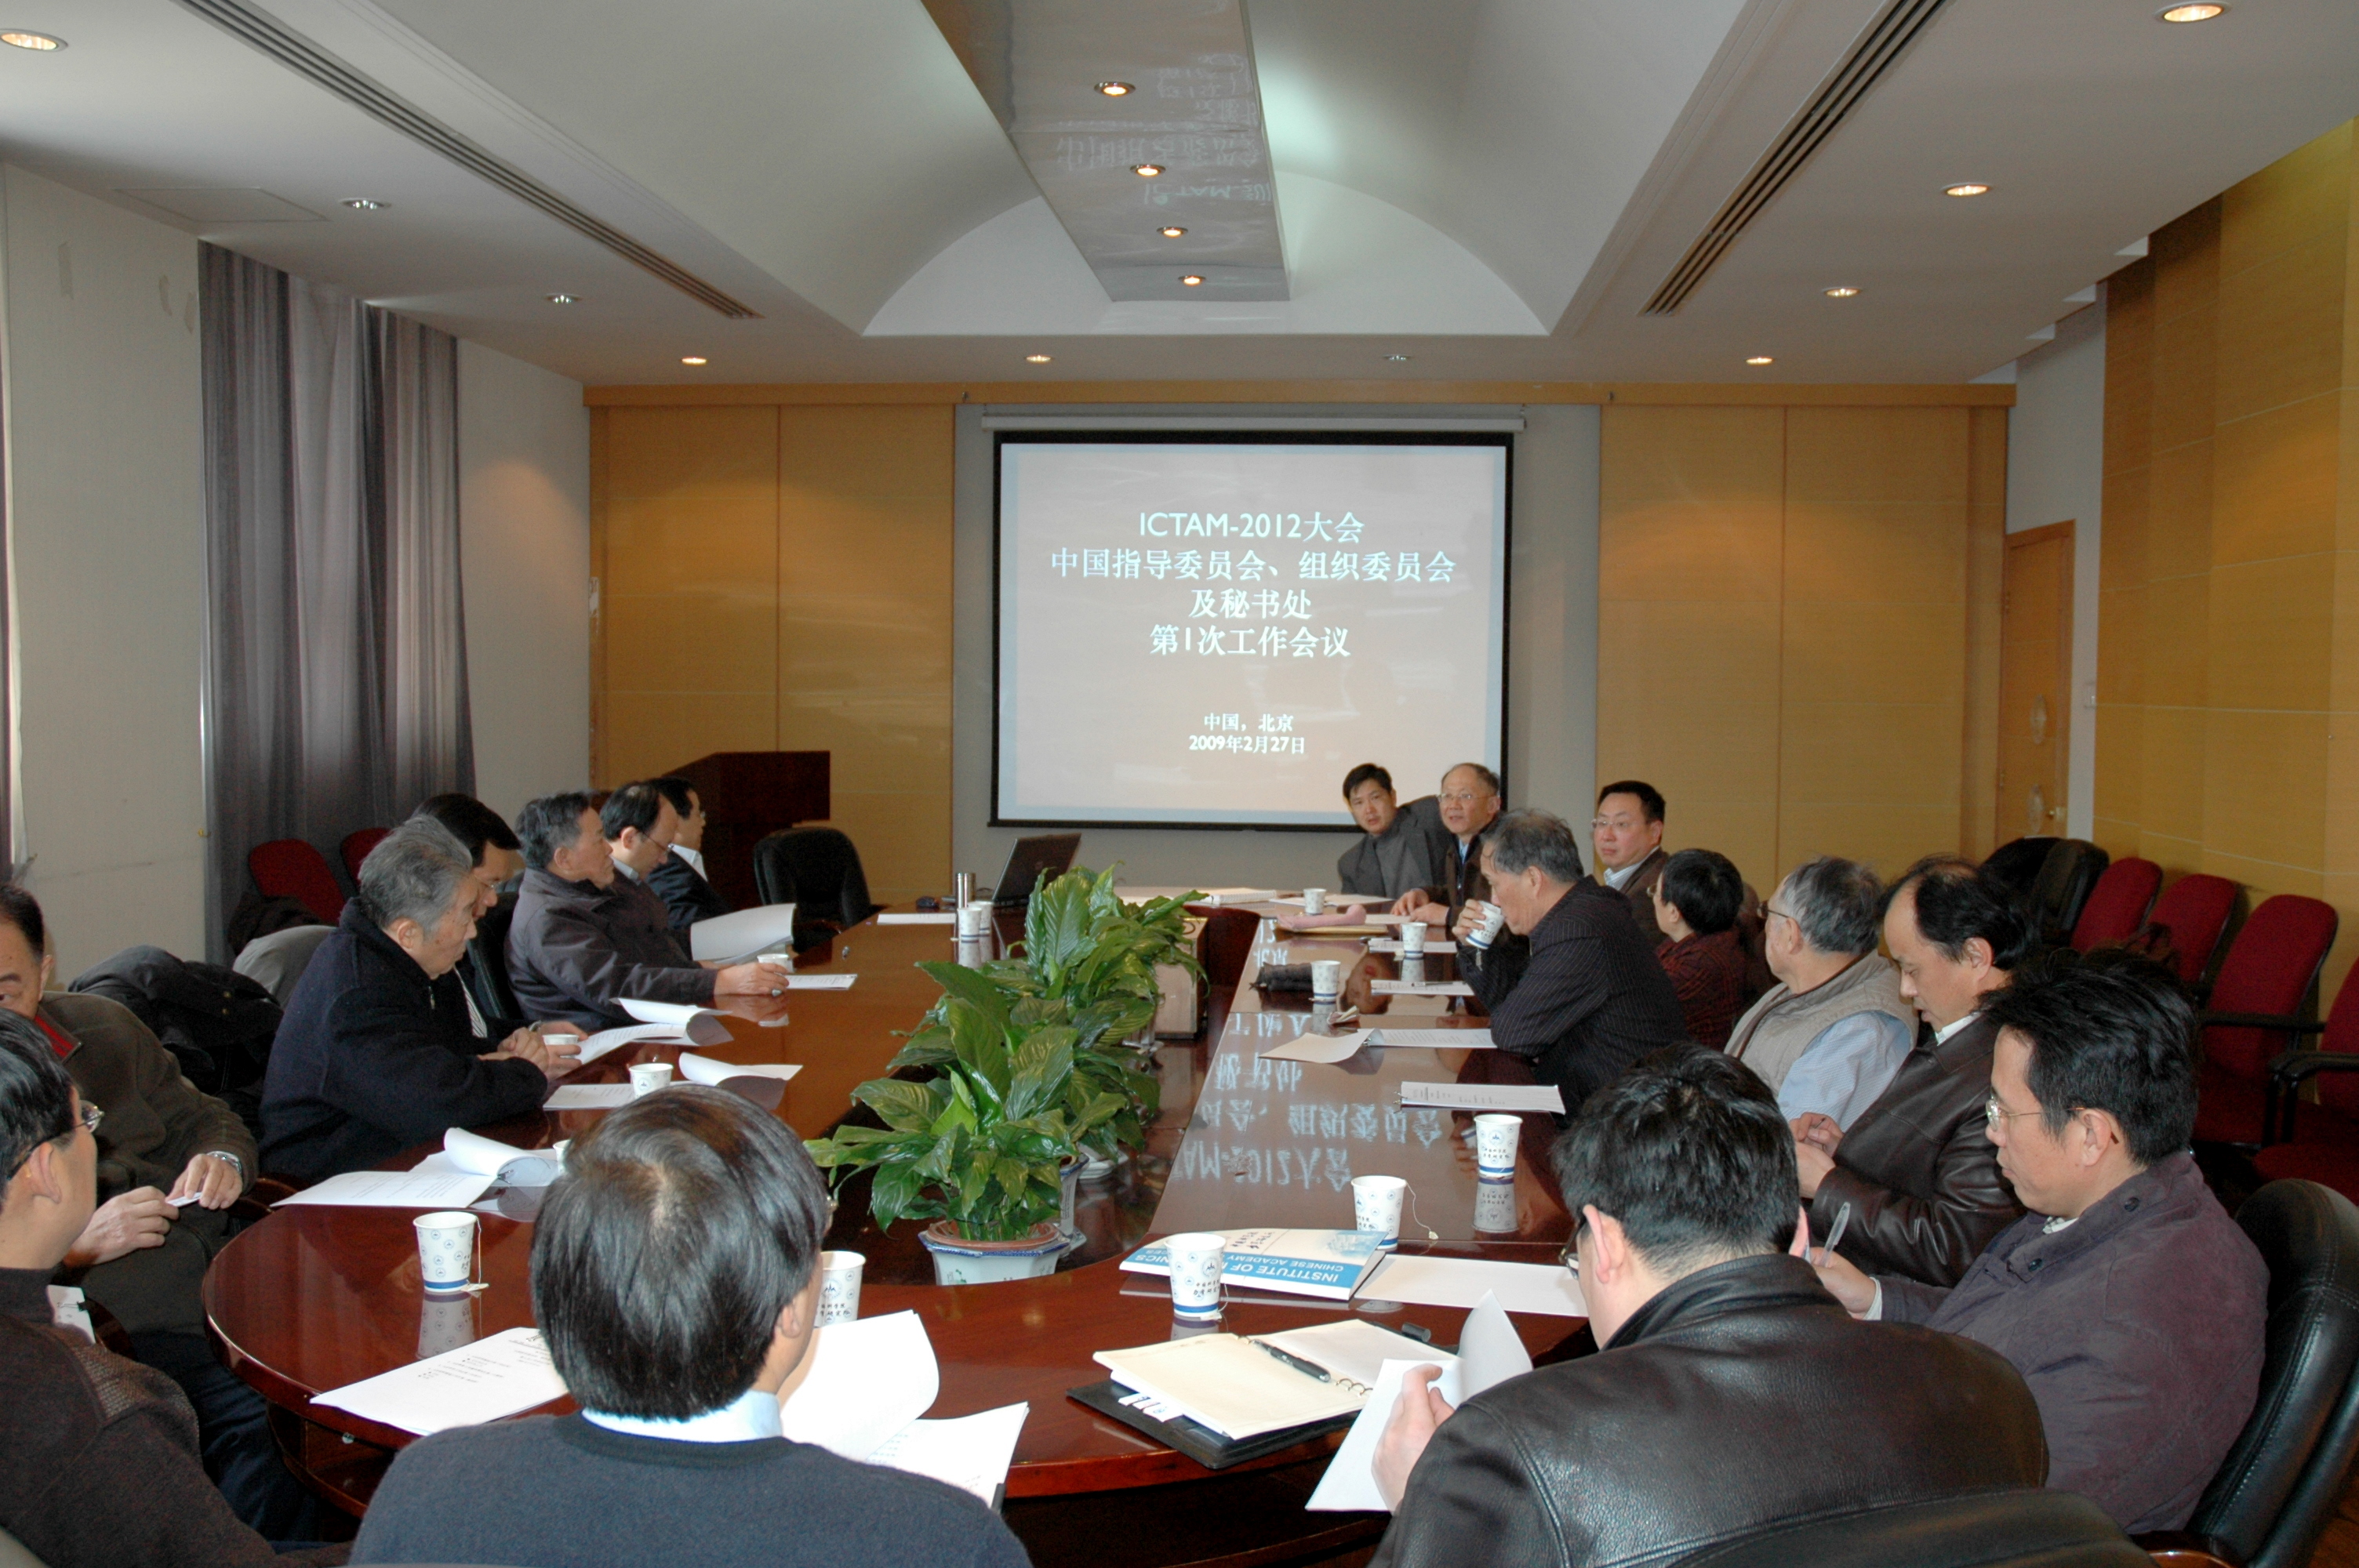 ICTAM2012中国指导组在北京召开工作会议（2009年2月27日），白以龙参加会议。